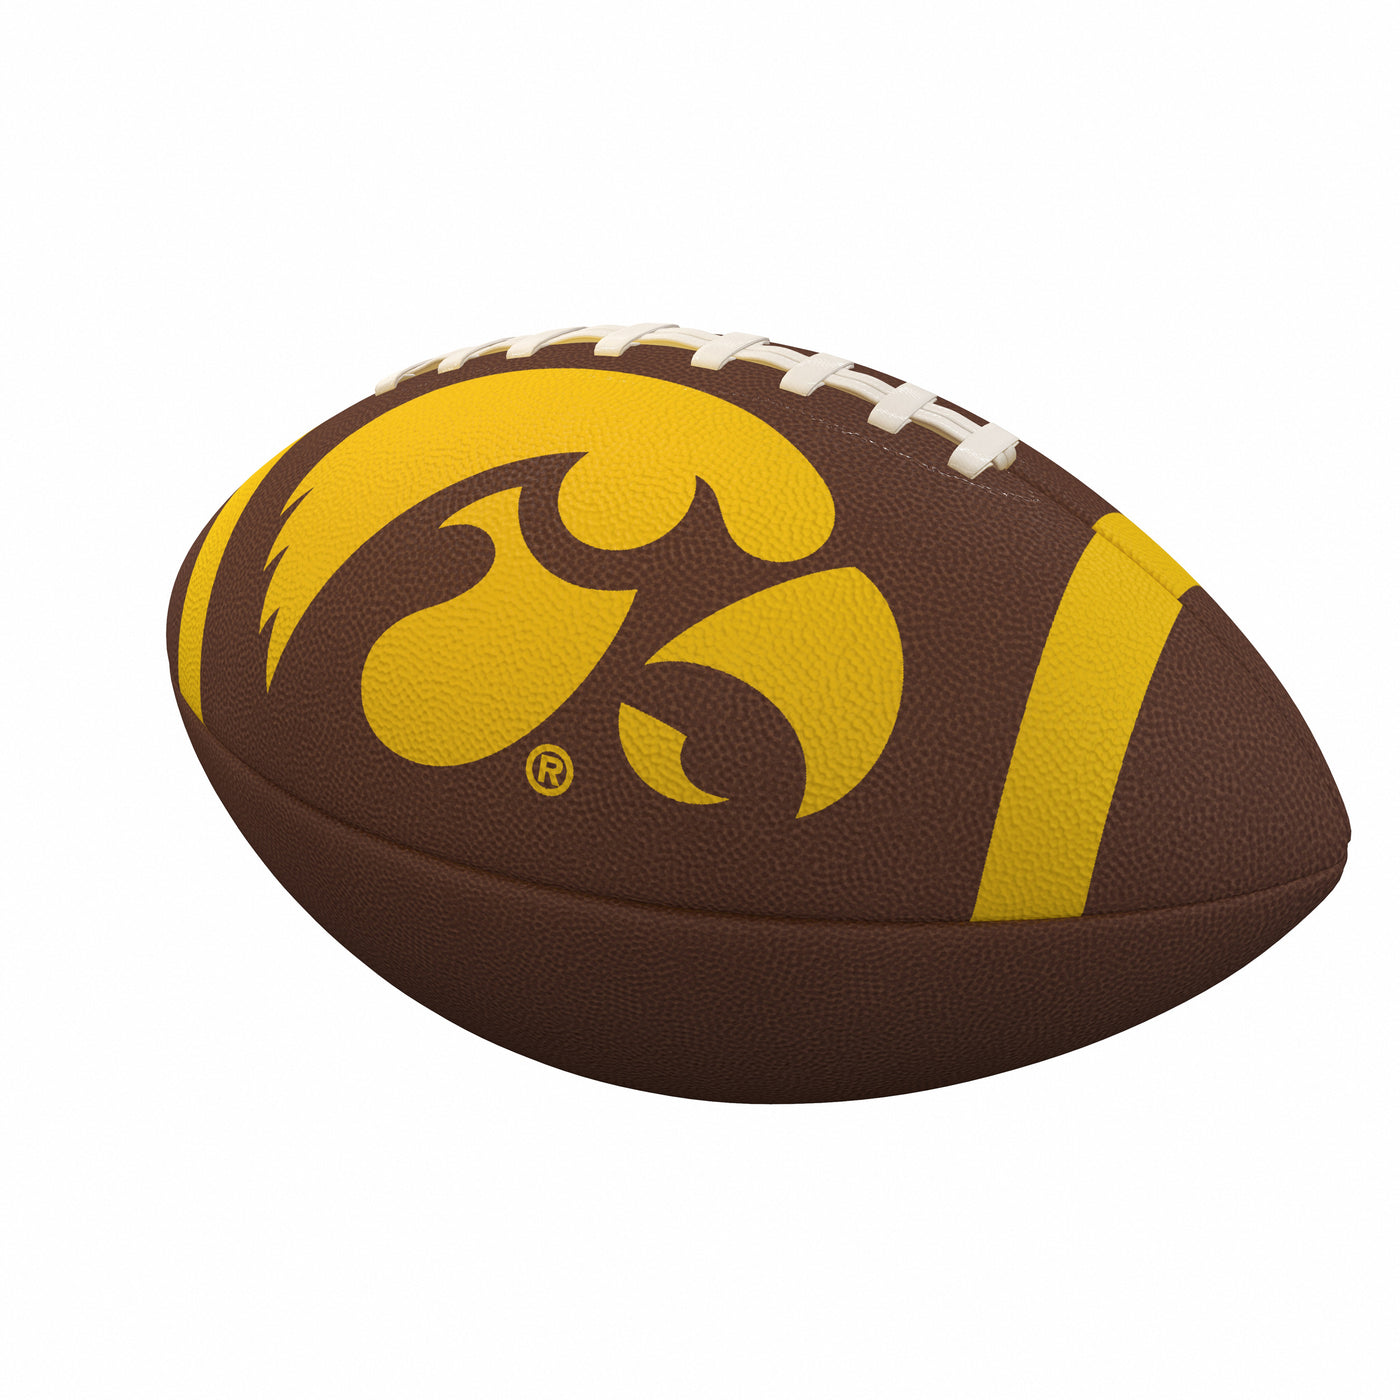 Iowa Team Stripe Official-Size Composite Football